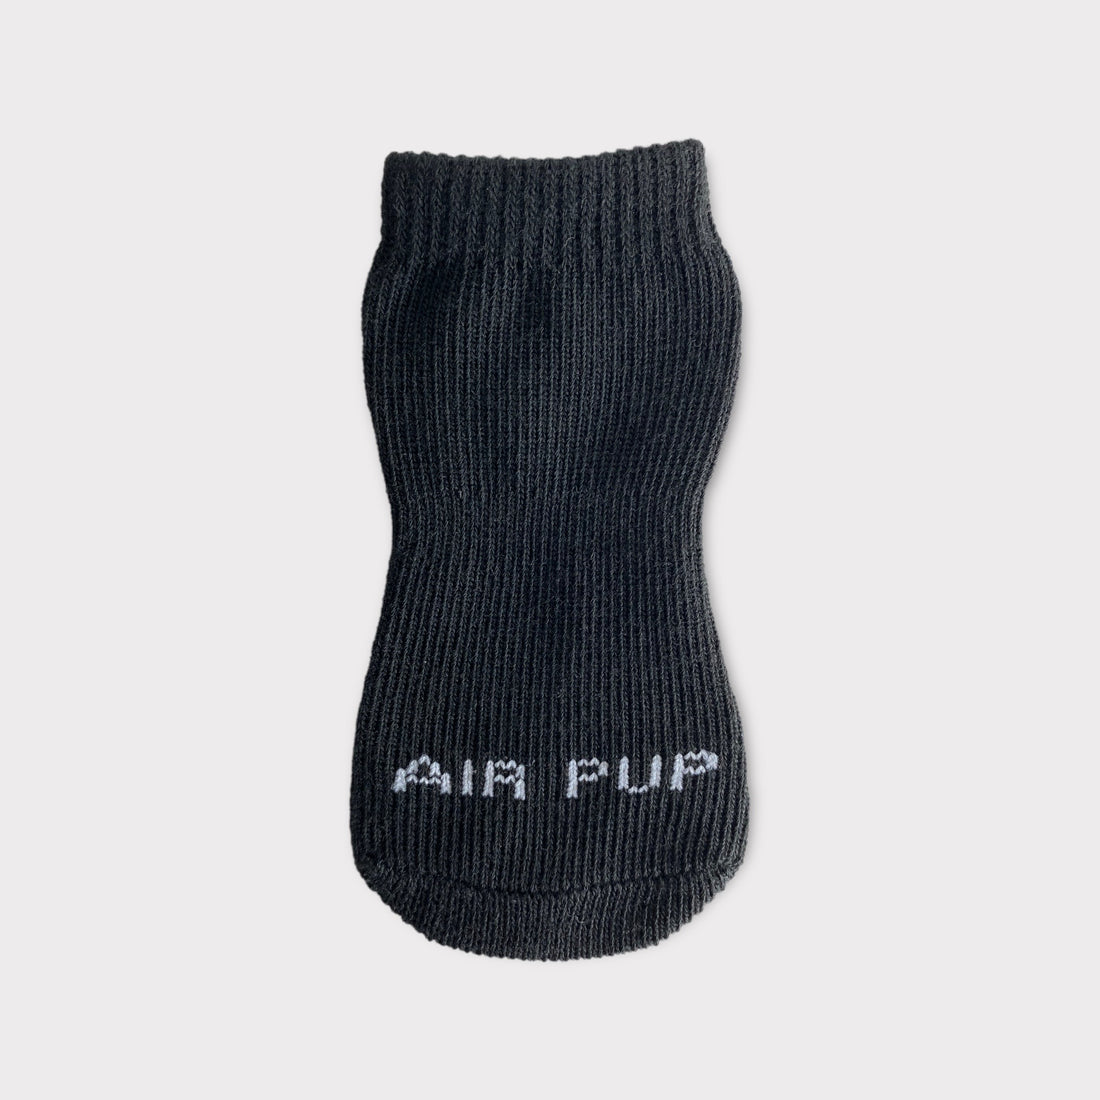 Air Pup sock front. 